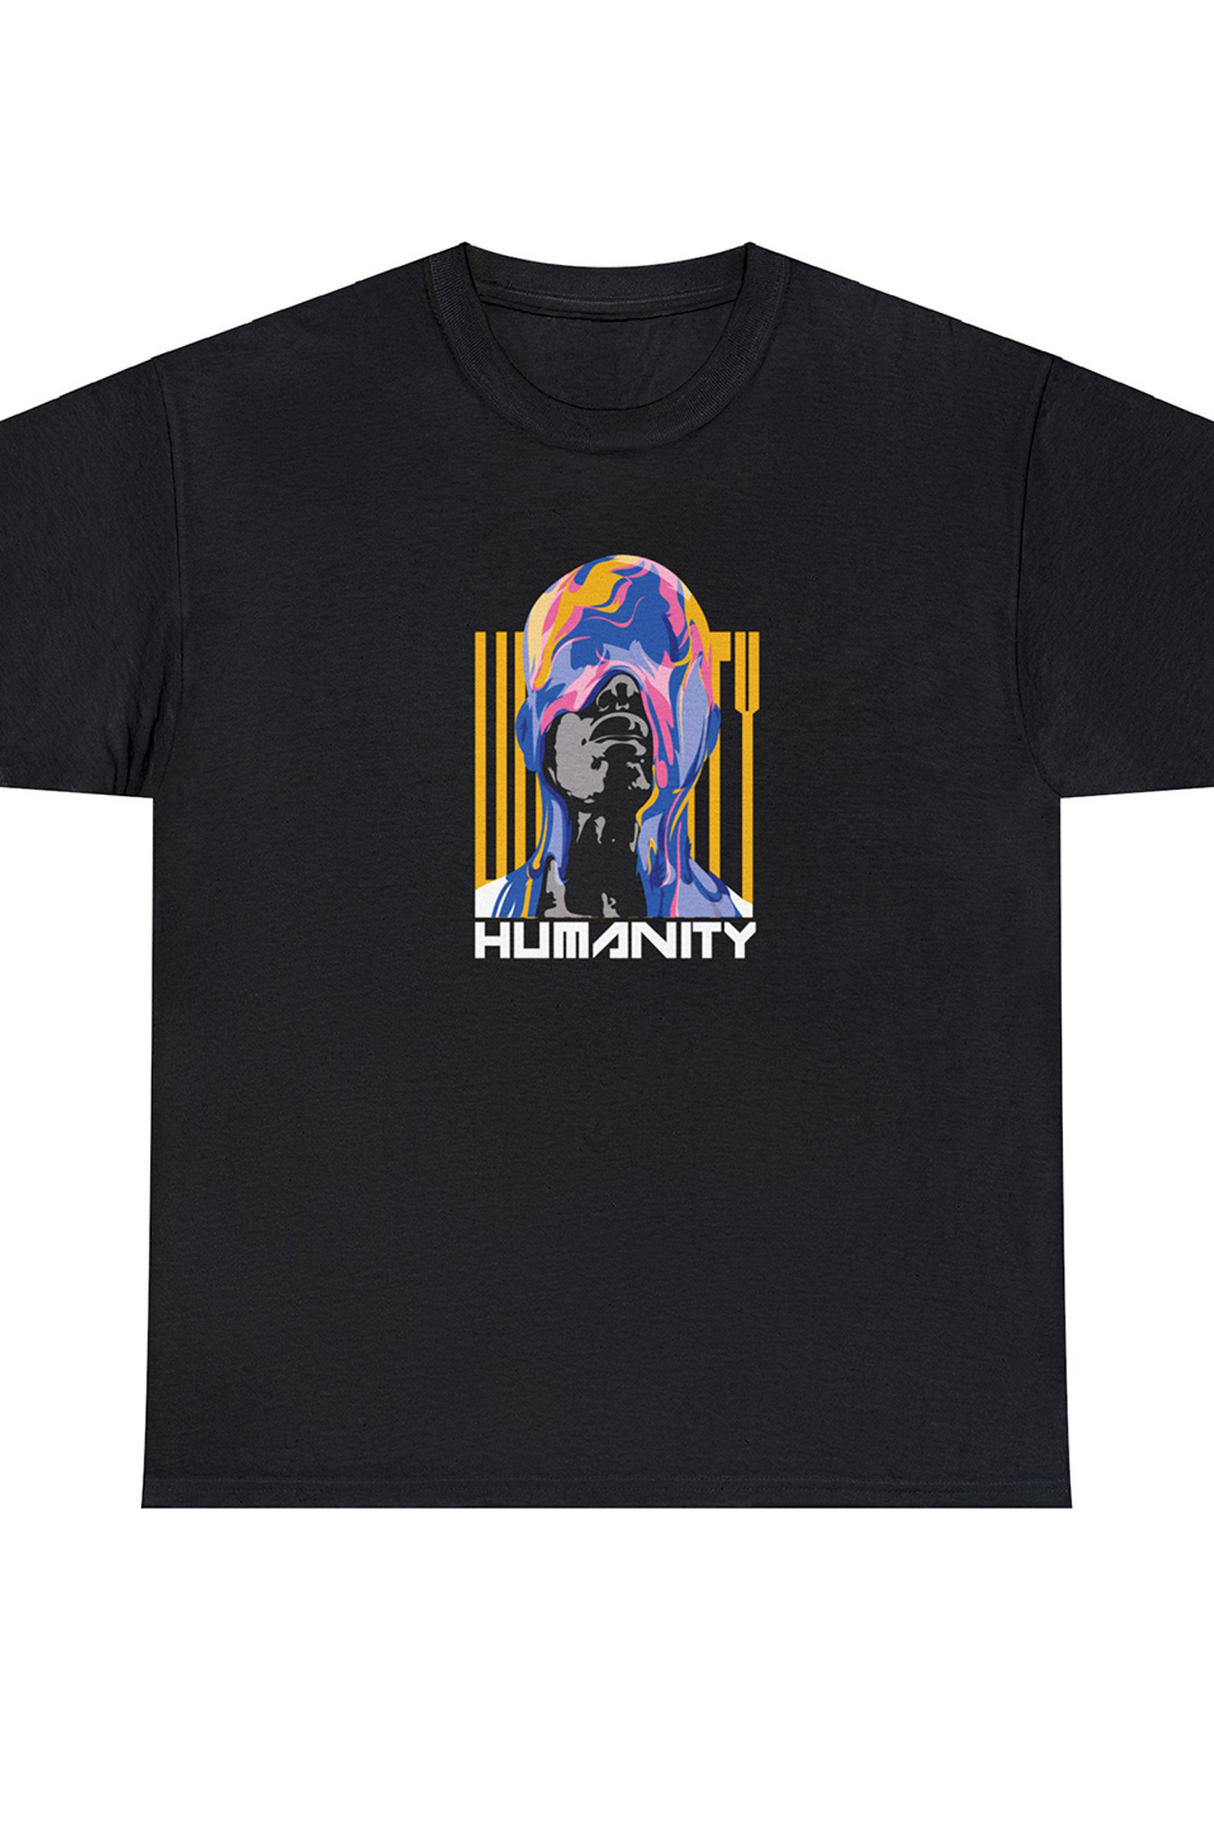 Humanity Graphic T Shirt